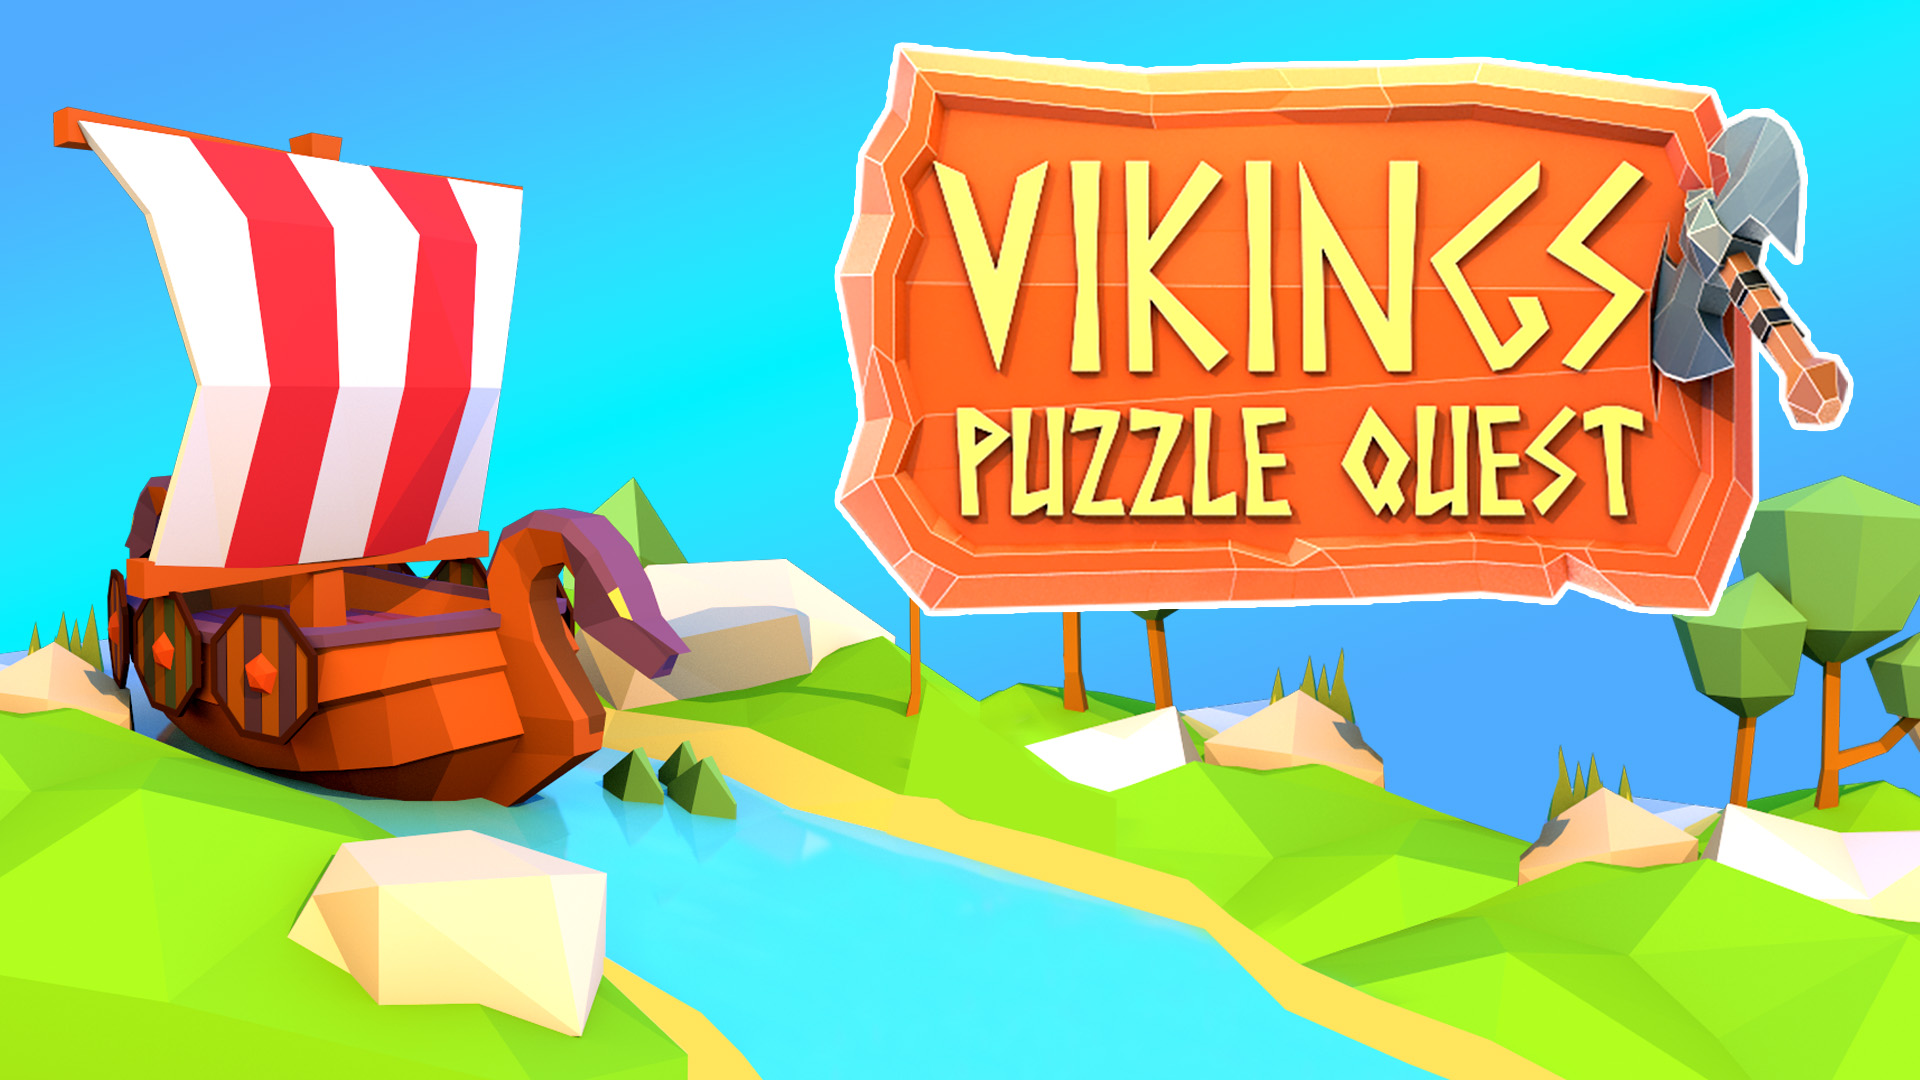 Vikings Puzzle Quest Game Image